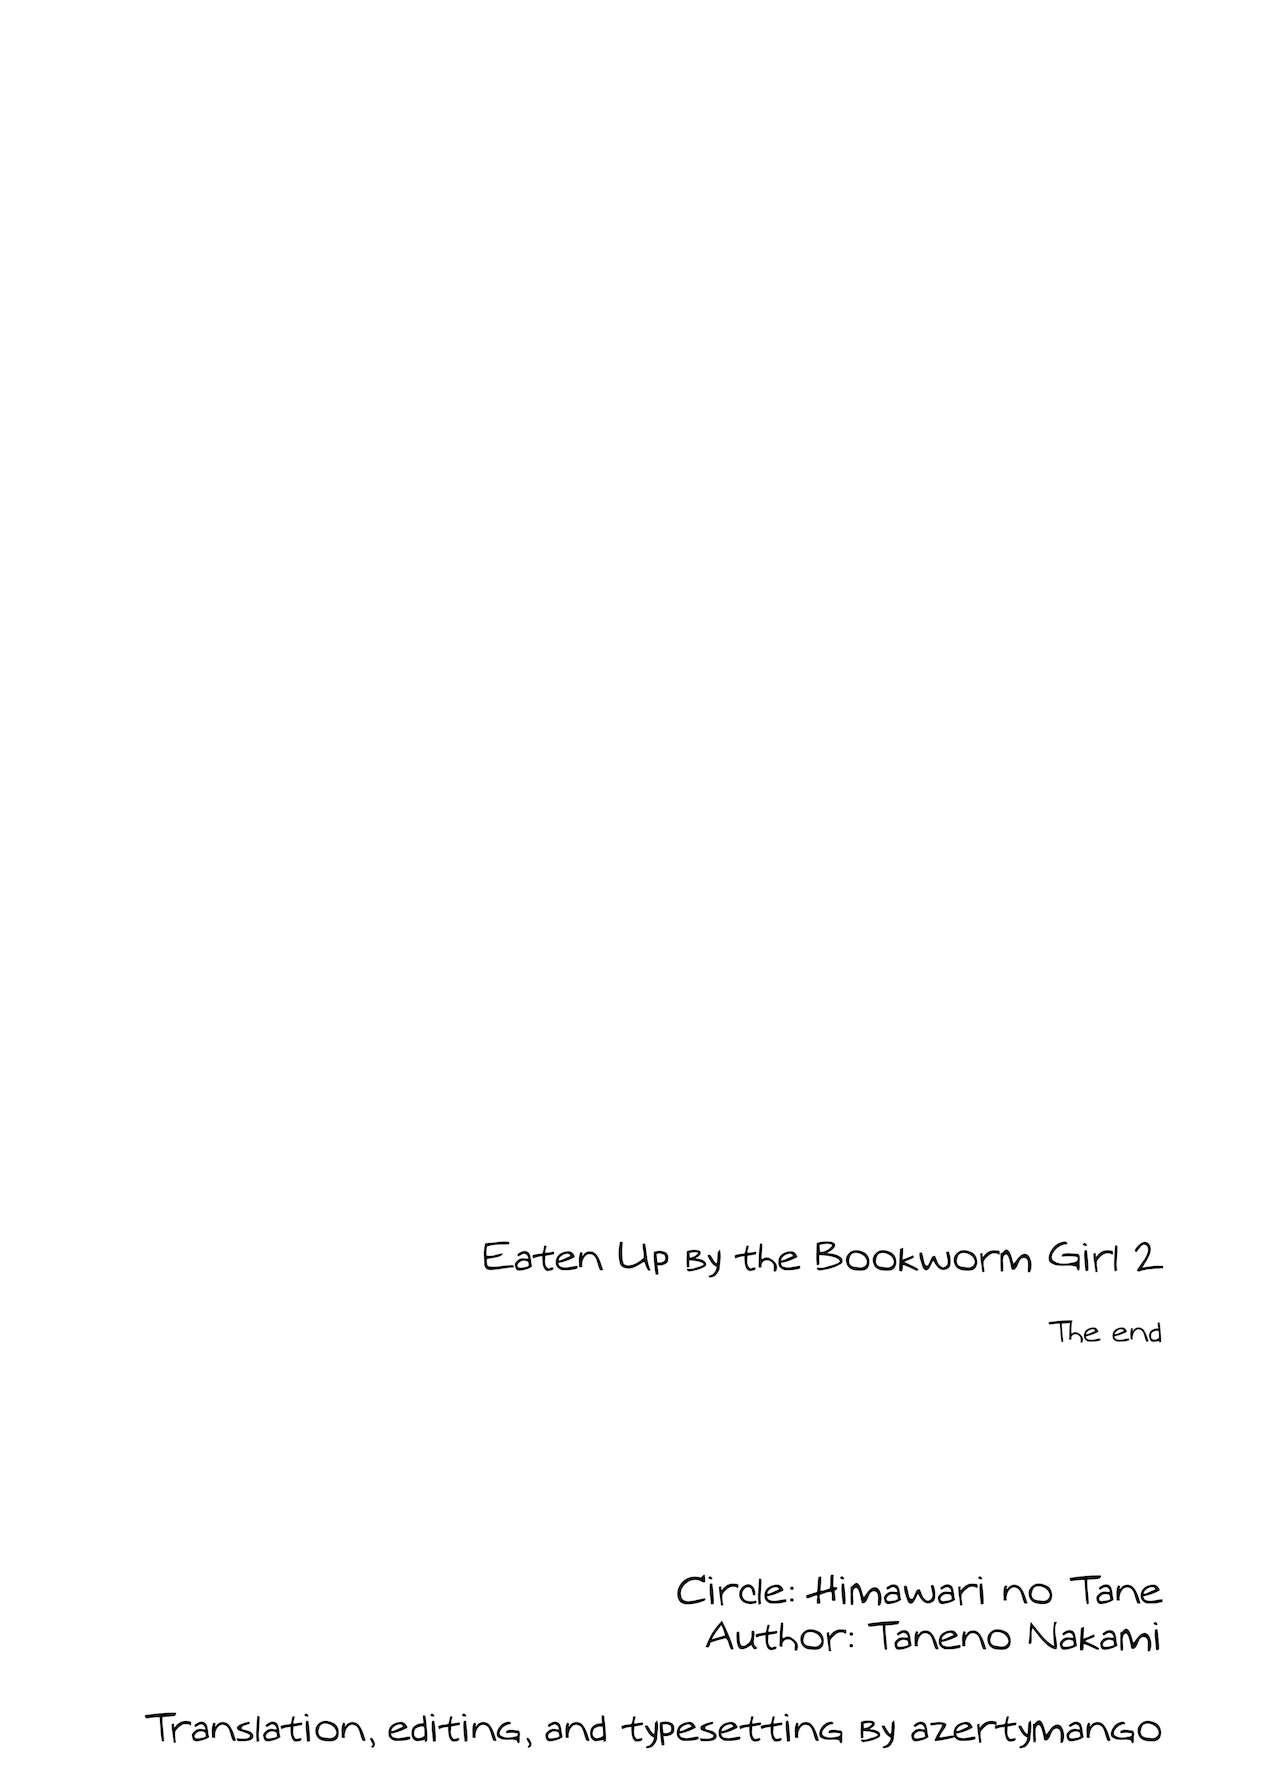 Bungaku Joshi ni Taberareru 2 | Eaten Up by the Bookworm Girl 2 94